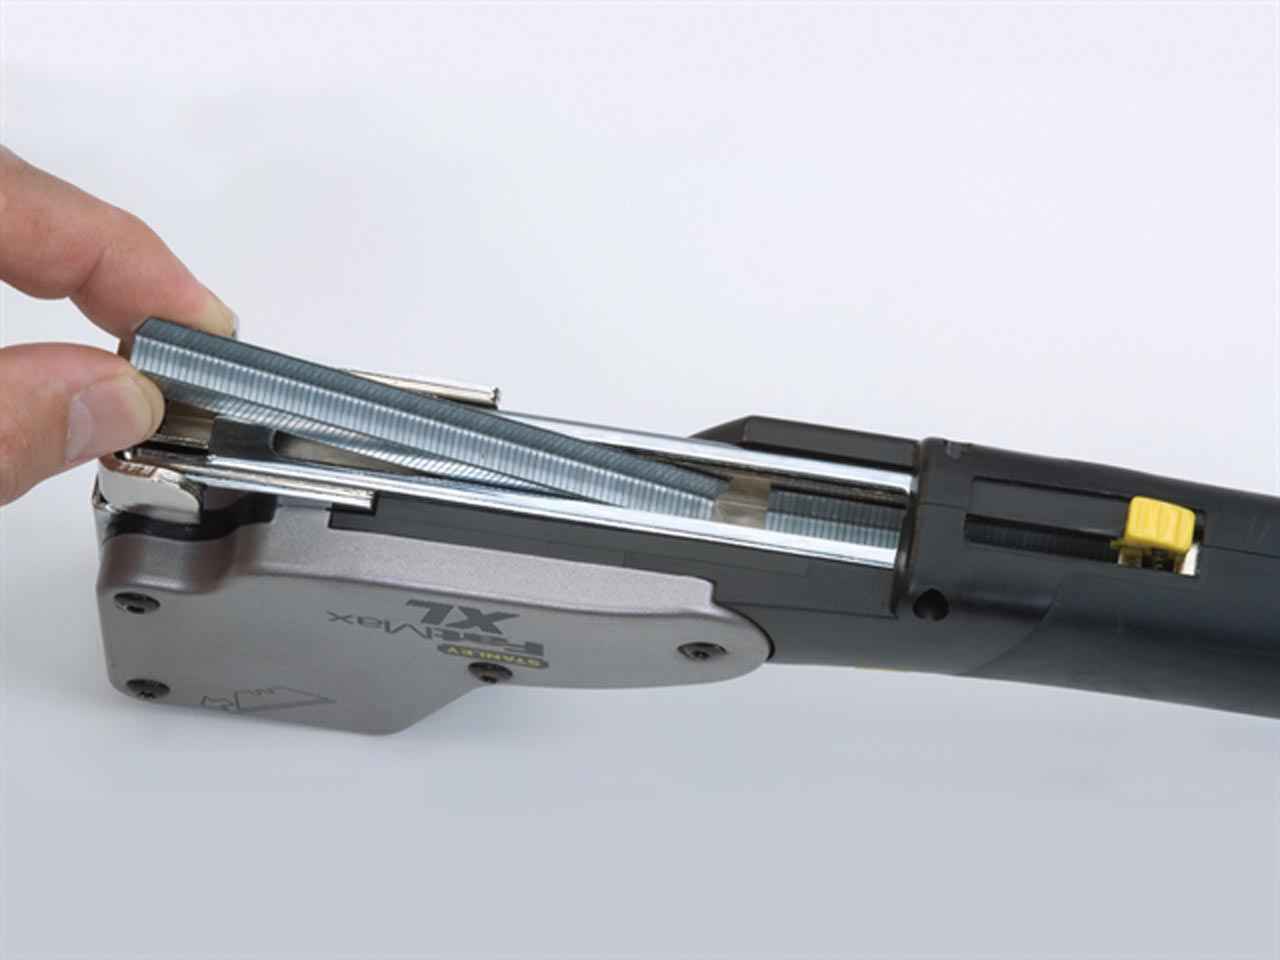 Mechanical tacker FatMax - - guns staple tools 0-PHT350 Stanley - guns, 0-PHT350 Nailers, staple Manual riveting